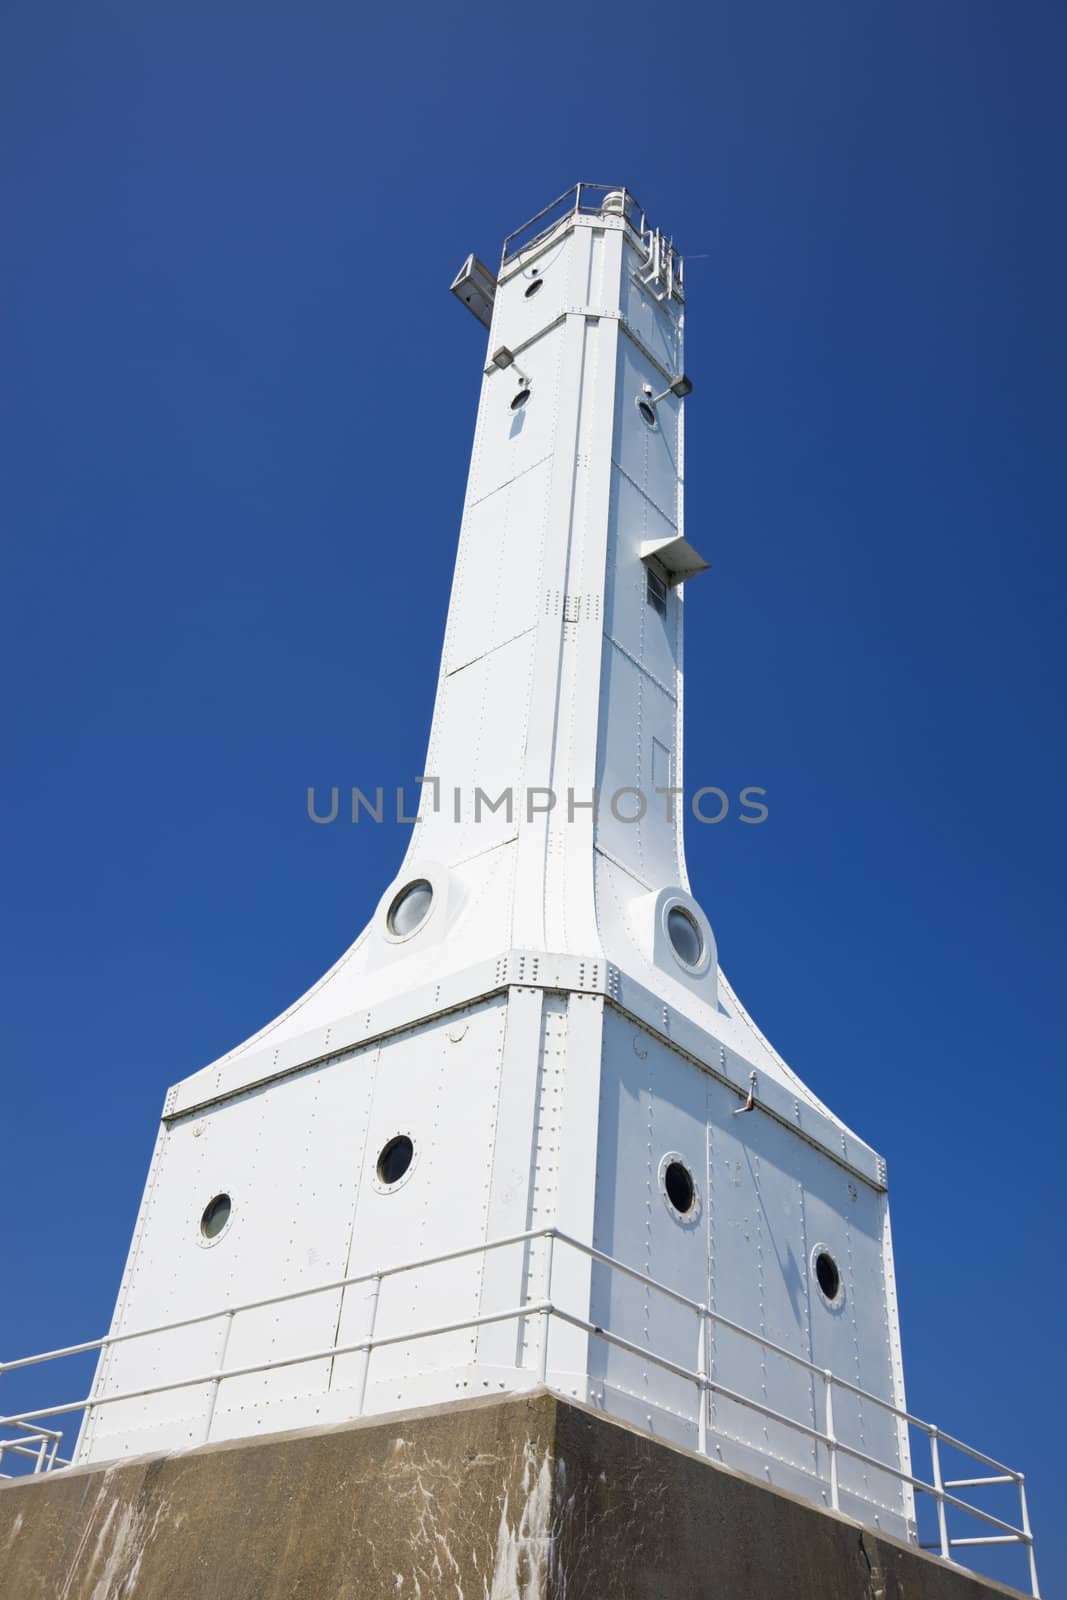 Huron Harbor Lighthouse in Ohio, USA.